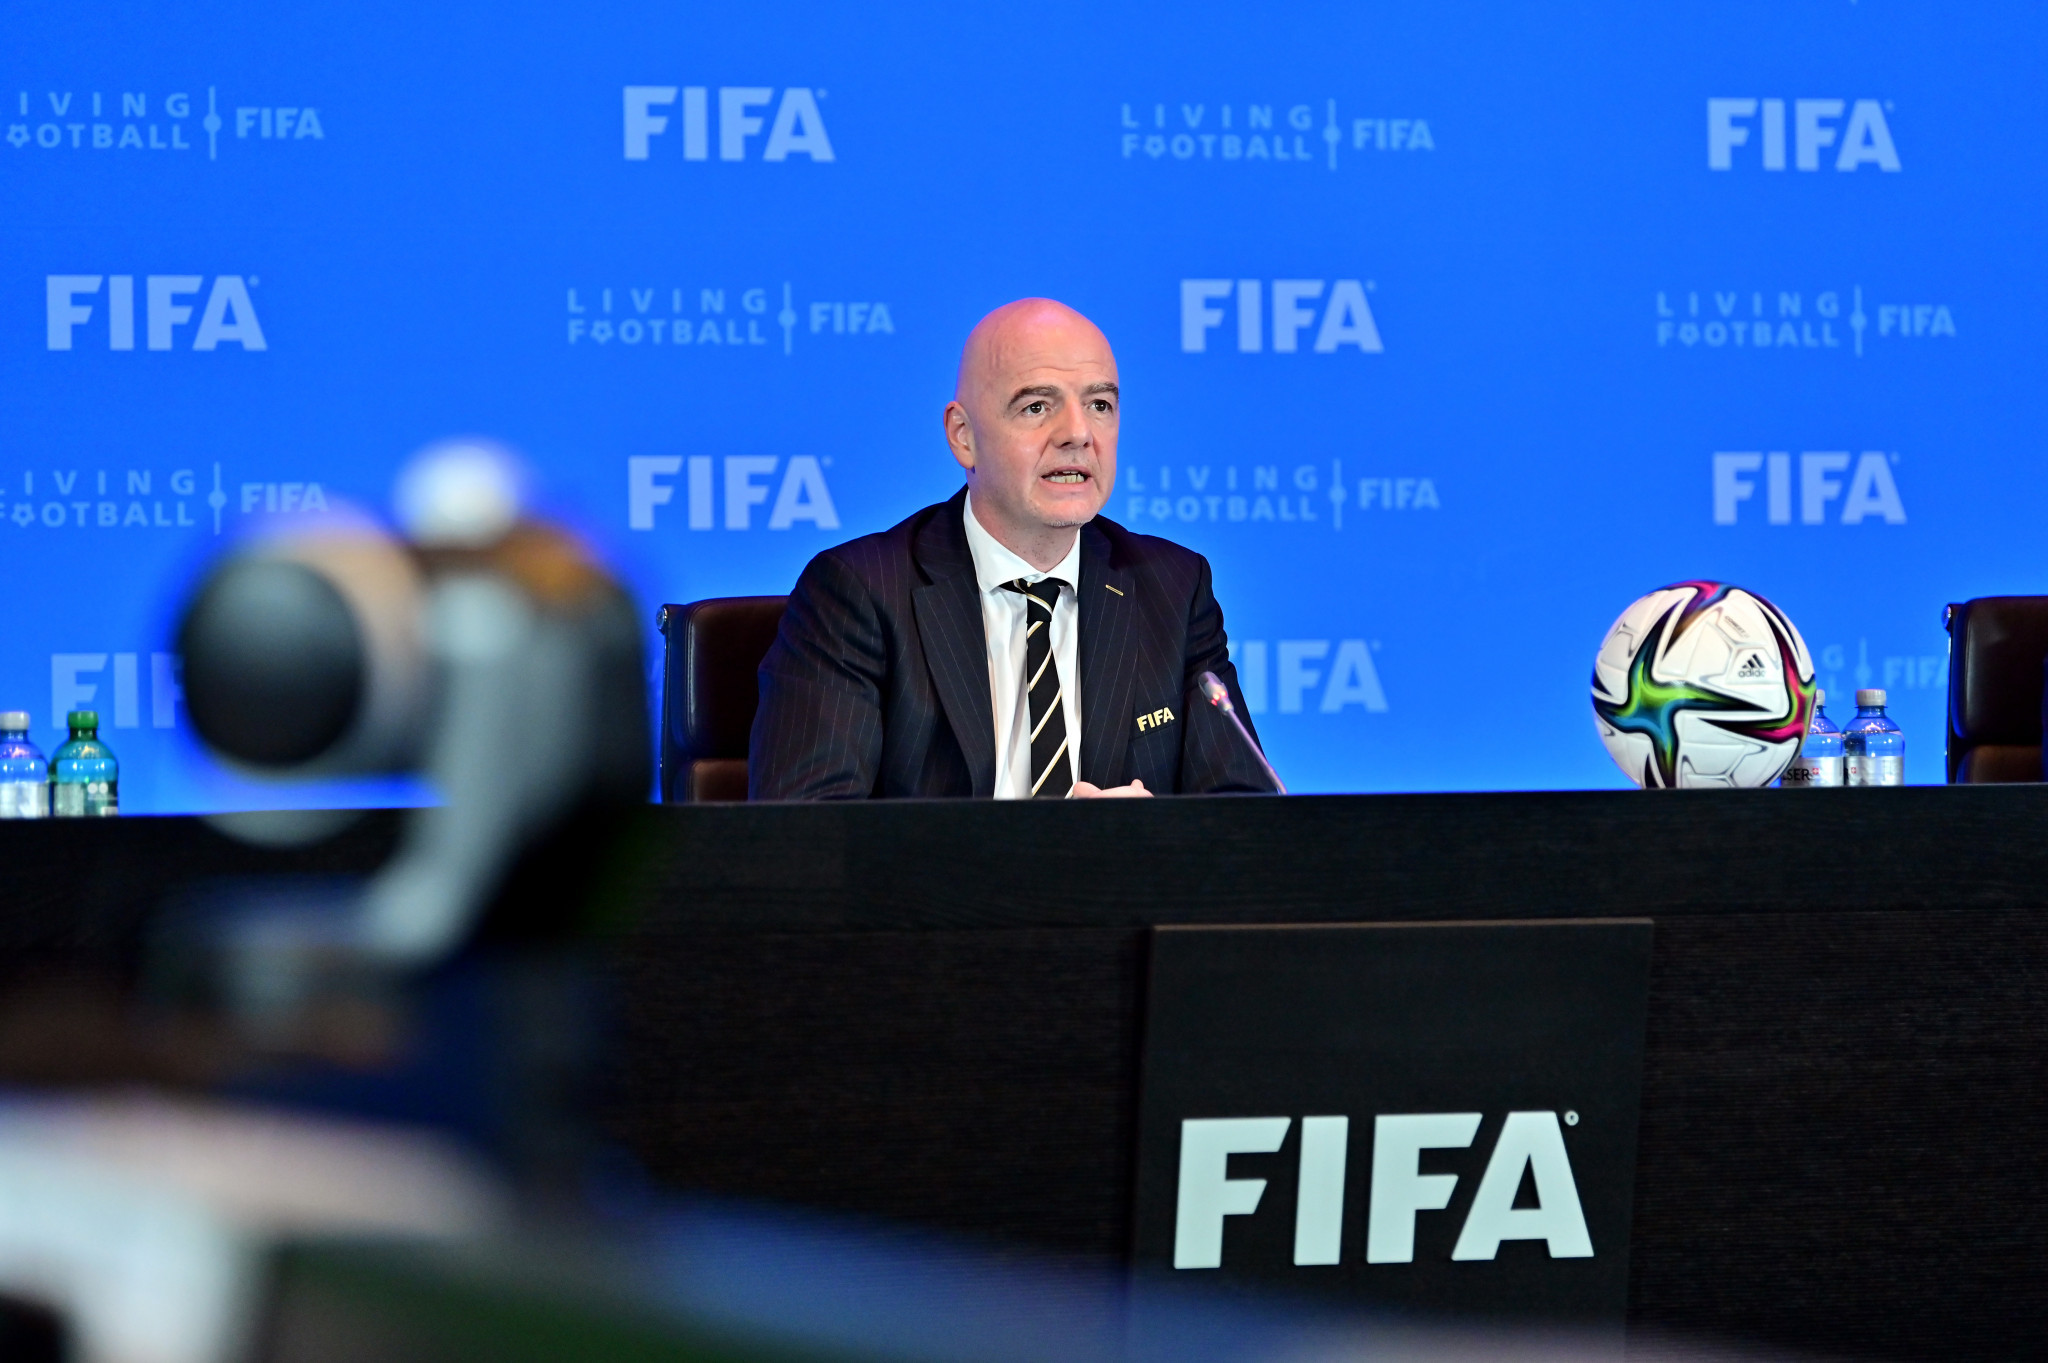 FIFA President Infantino moves to Qatar, Swiss newspaper reports